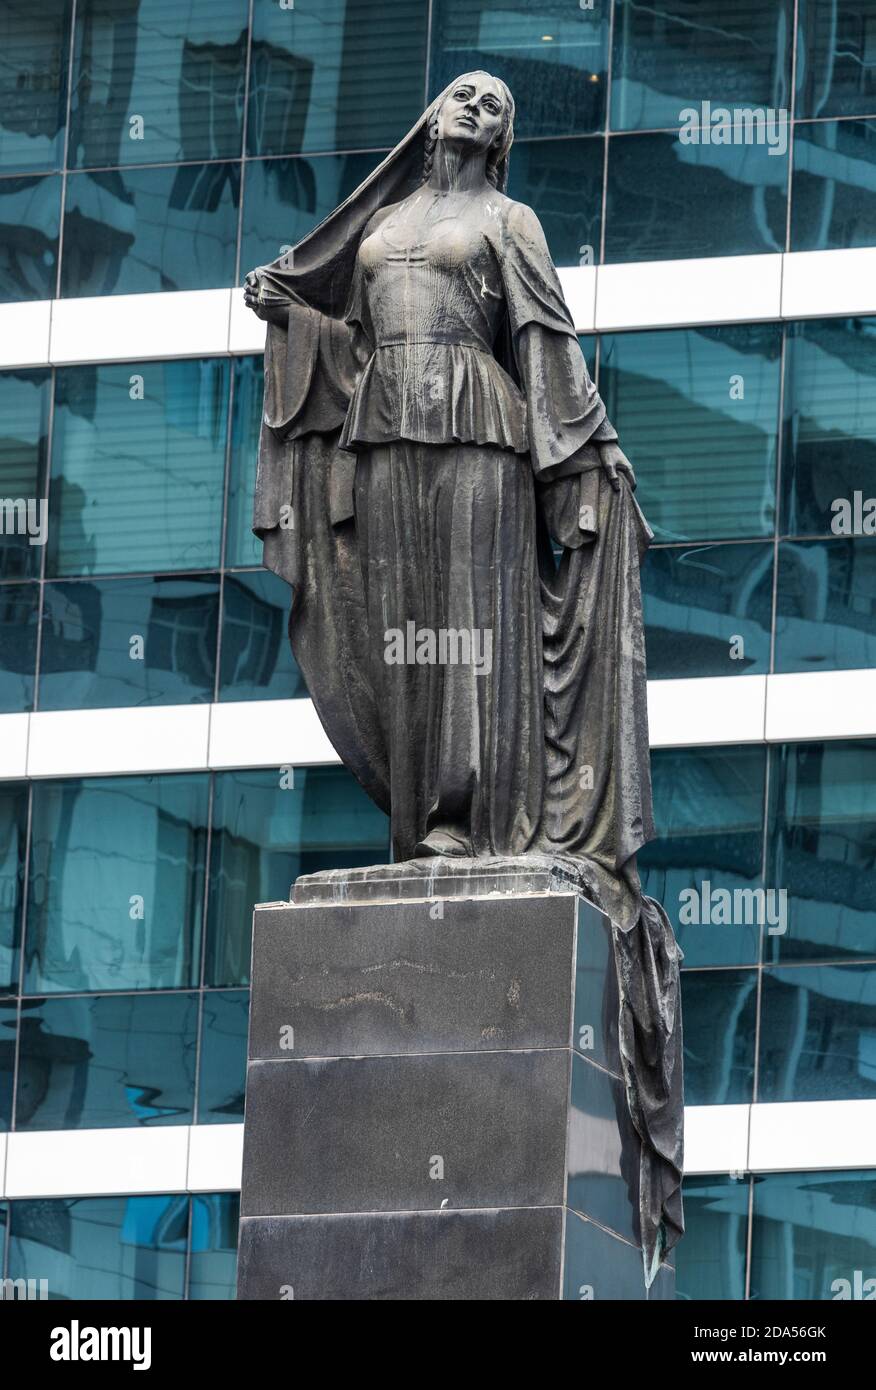 Baku, Azerbaijan – September 4, 2020.  Free Woman statue, depicting Azeri woman symbolically throwing off her hijab, in Baku, Azerbaijan. Located near Stock Photo